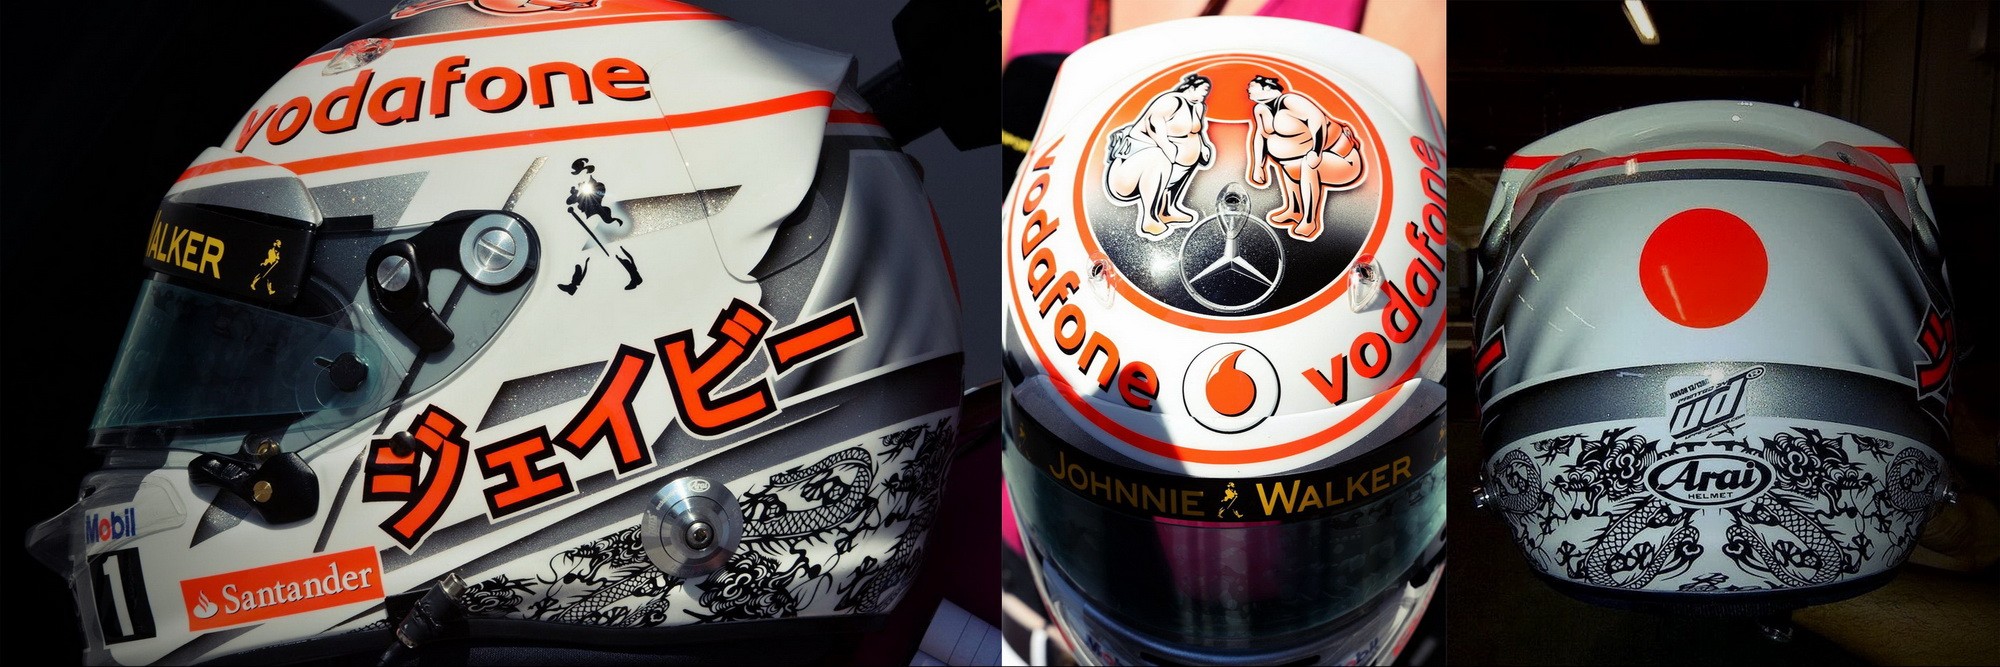 Шлем Дженсона Баттона на Гран-При Японии 2013 | 2013 Japanese Grand Prix helmet of Jenson Button